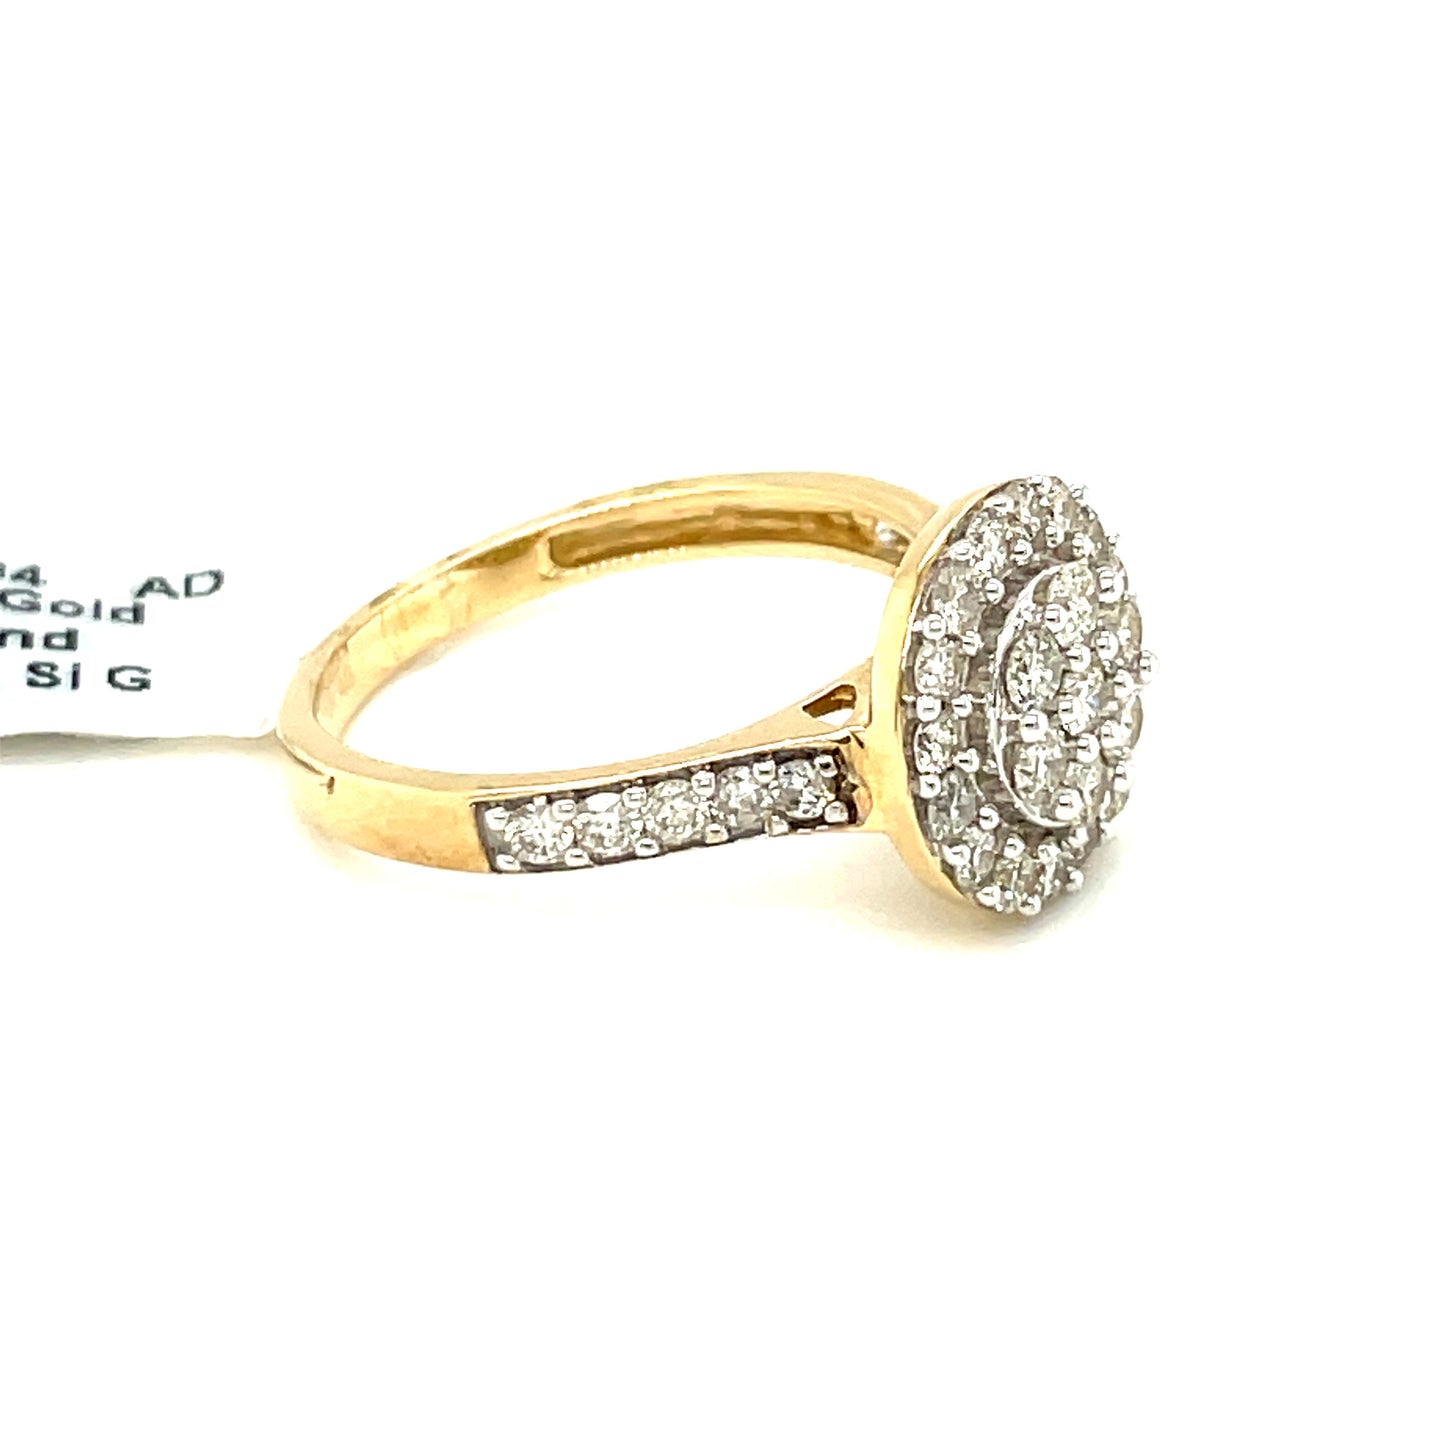 10K Yellow Gold 1.00ct Diamond Ladies Ring Si G